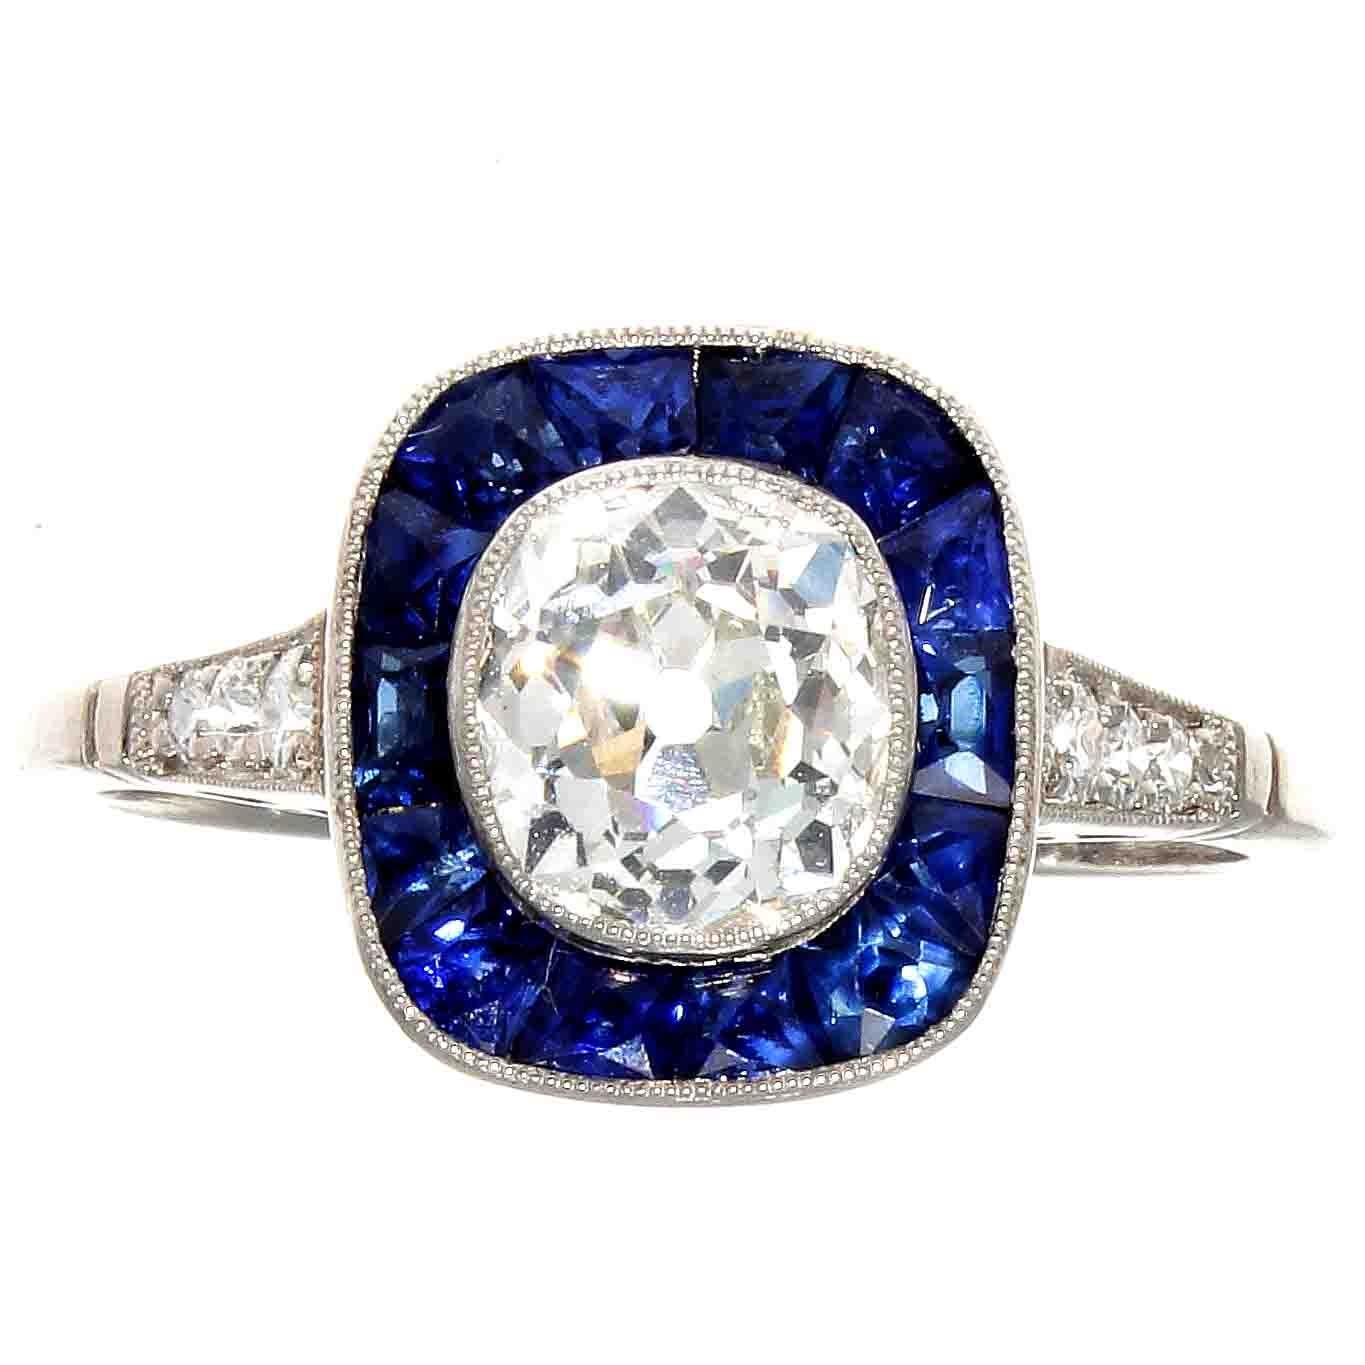 1+ Carat Diamond Platinum Engagement Ring With Calibré Cut Sapphire Halo